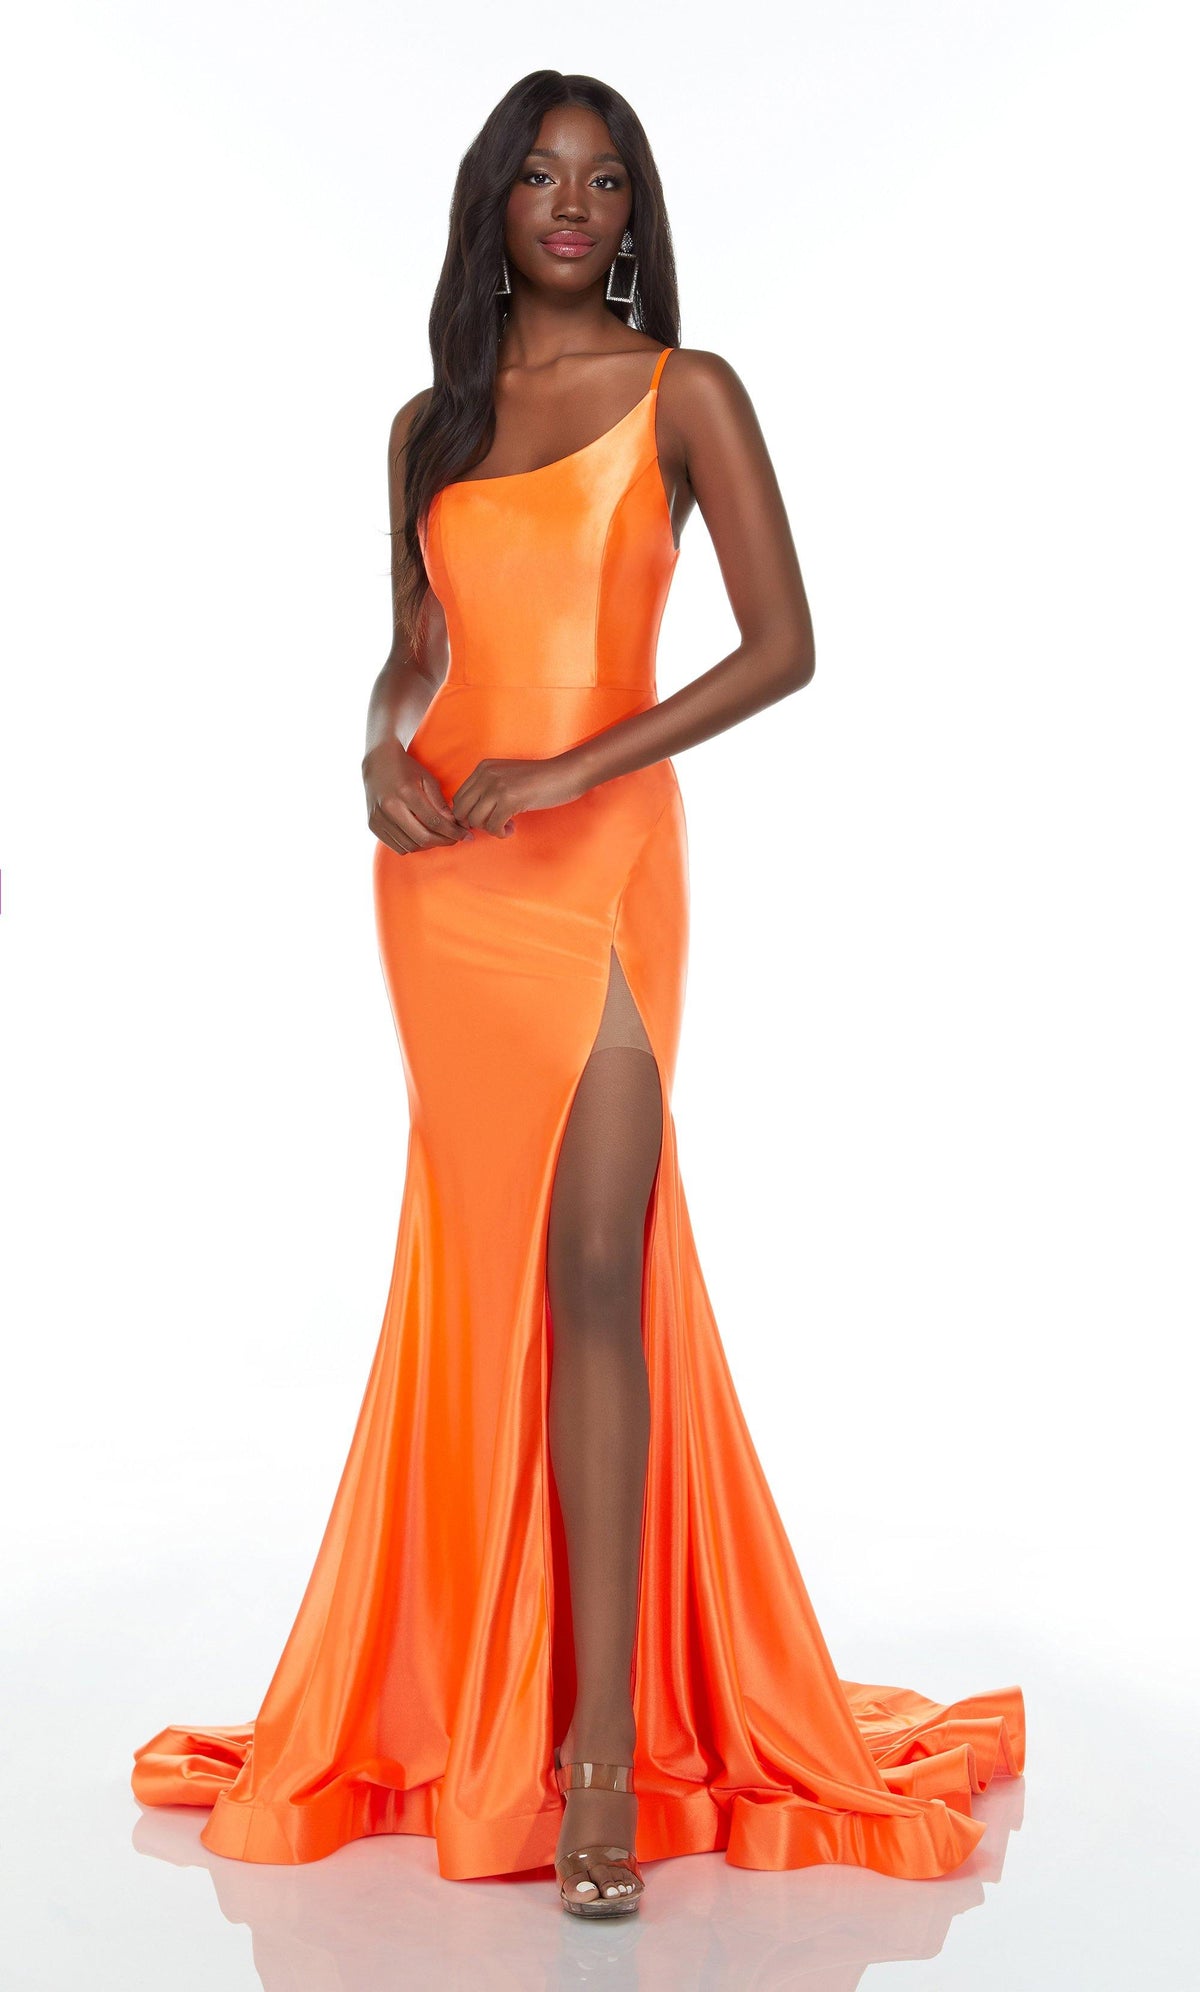 Formal Dress: 61159. Long Fitted Dresses, One Shoulder, Fit N Flare Alyce Paris